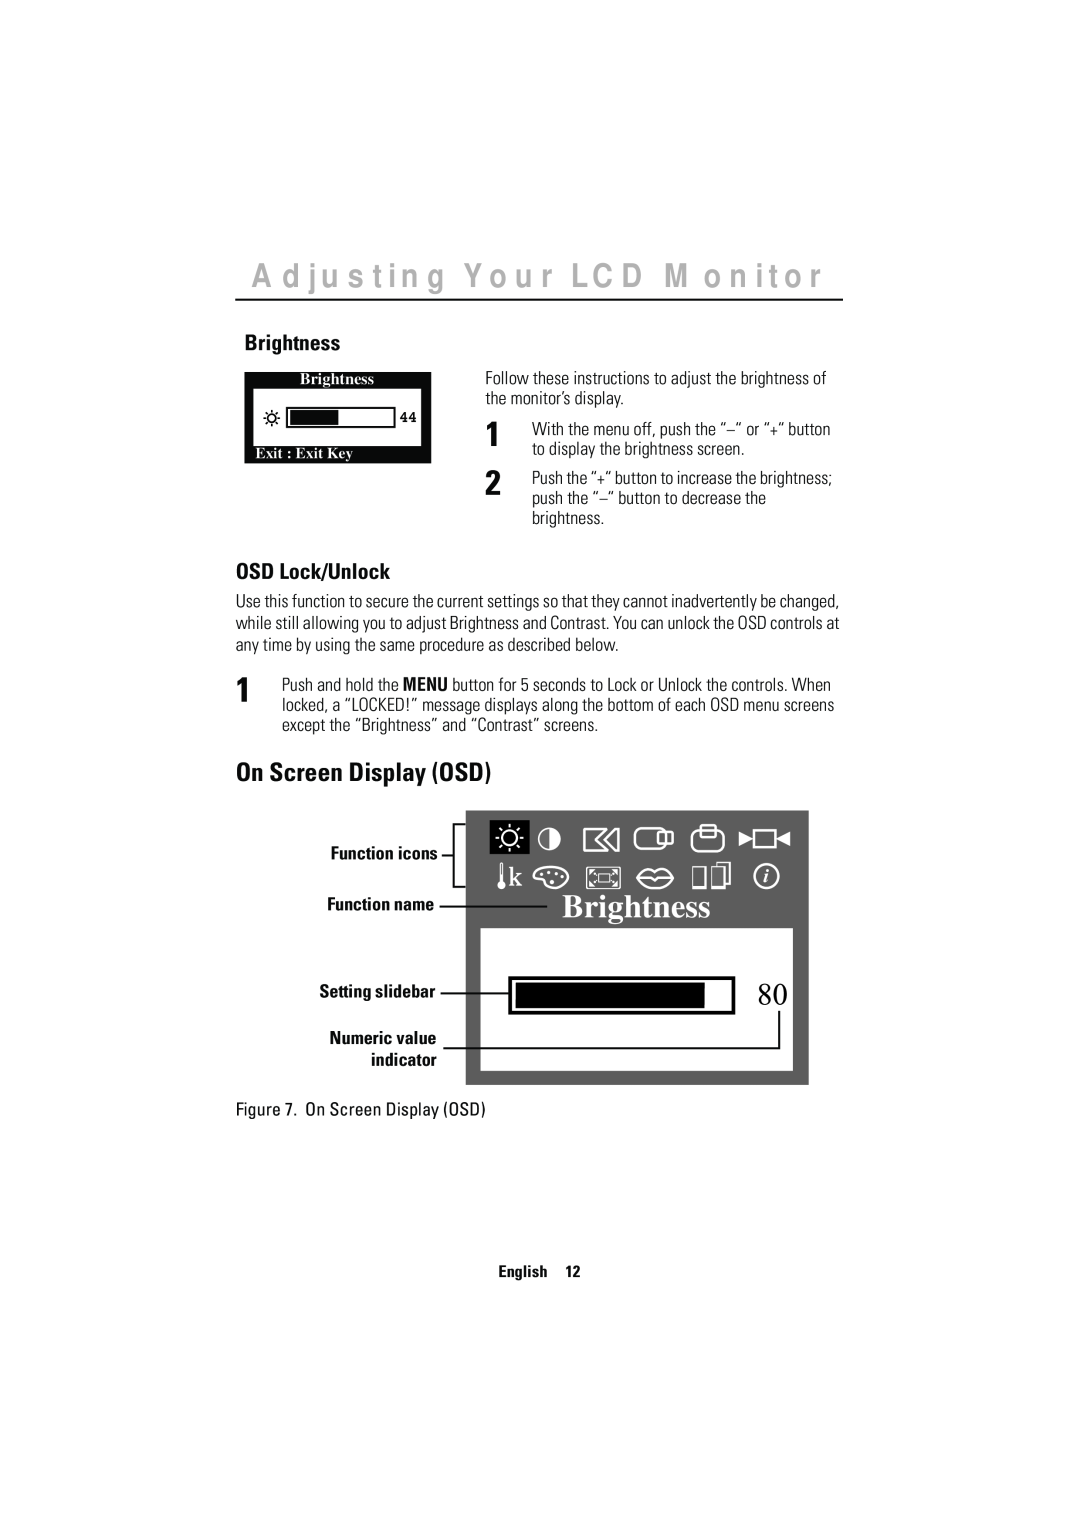 Samsung CN15MSAPS/EDC manual On Screen Display OSD, Brightness, OSD Lock/Unlock, Adjusting Your LCD Monitor, English 